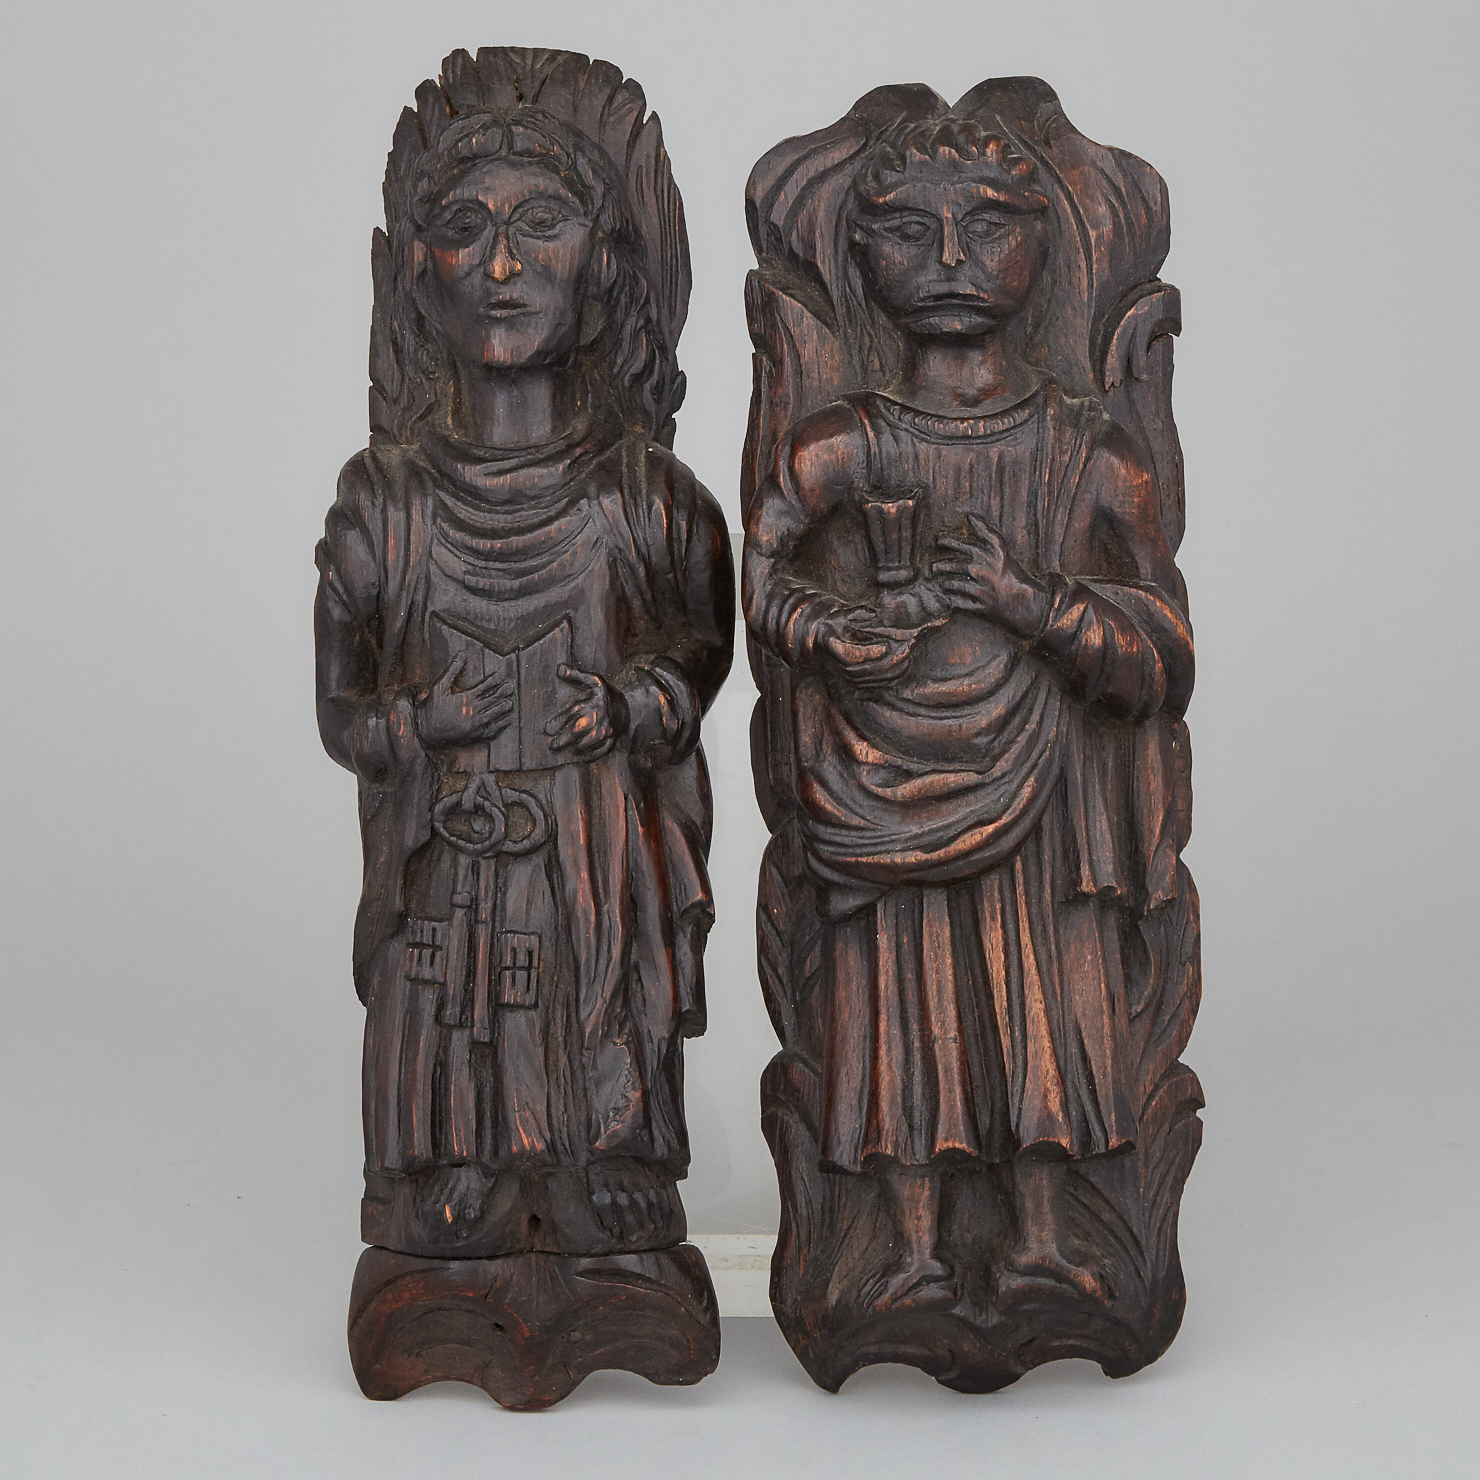 Pair of English Carved Wood Apostolic Term Figures, 16th century